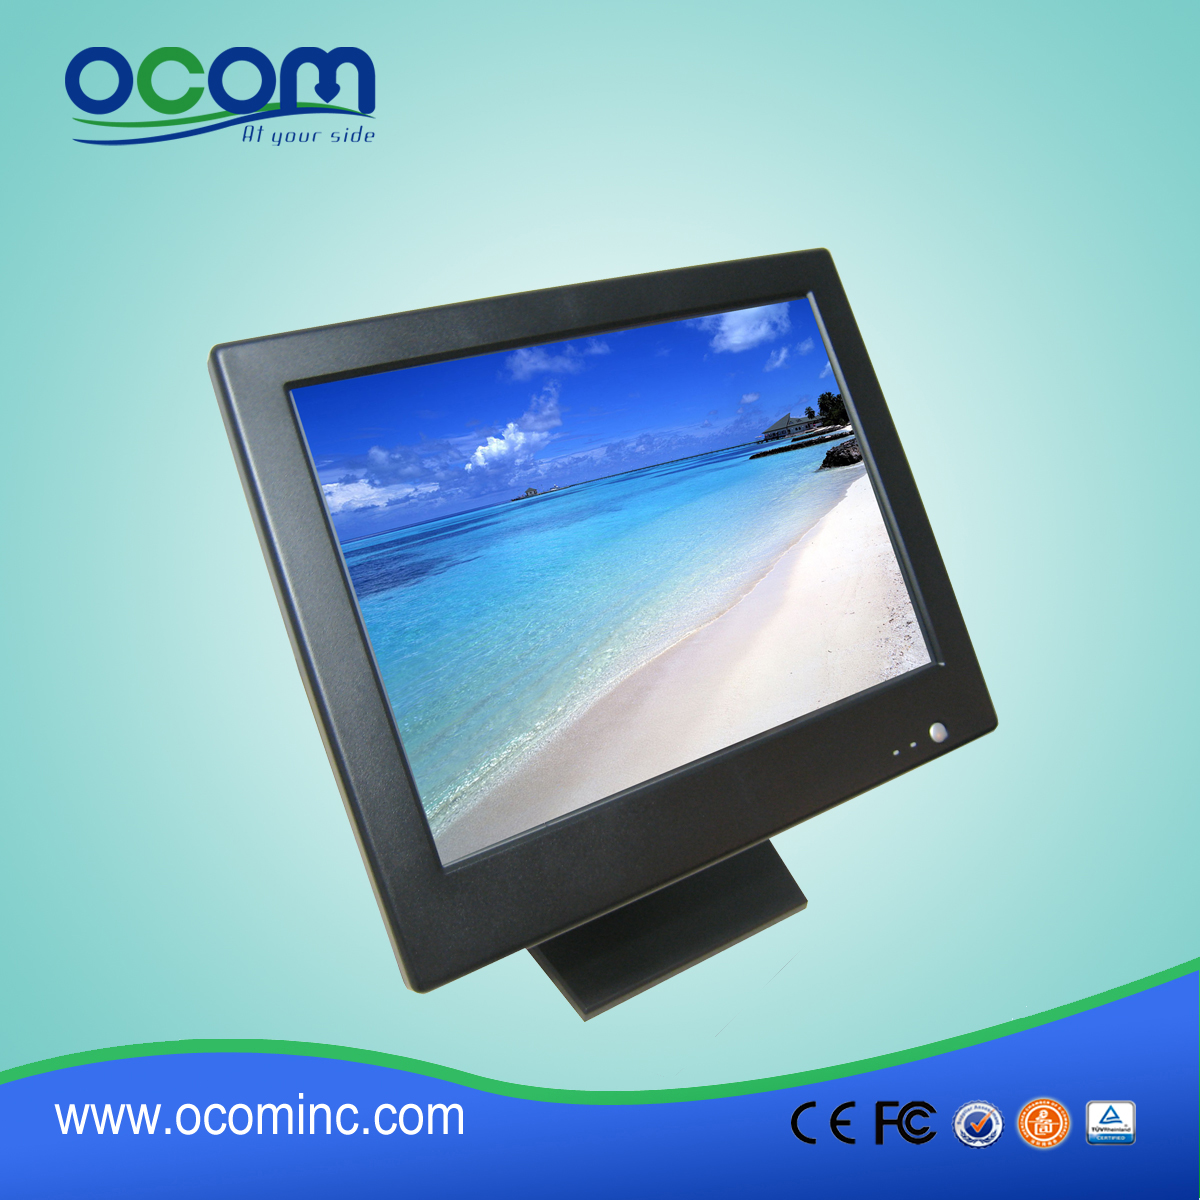 TM1502 POS Touch Screen monitor met hoge resolutie